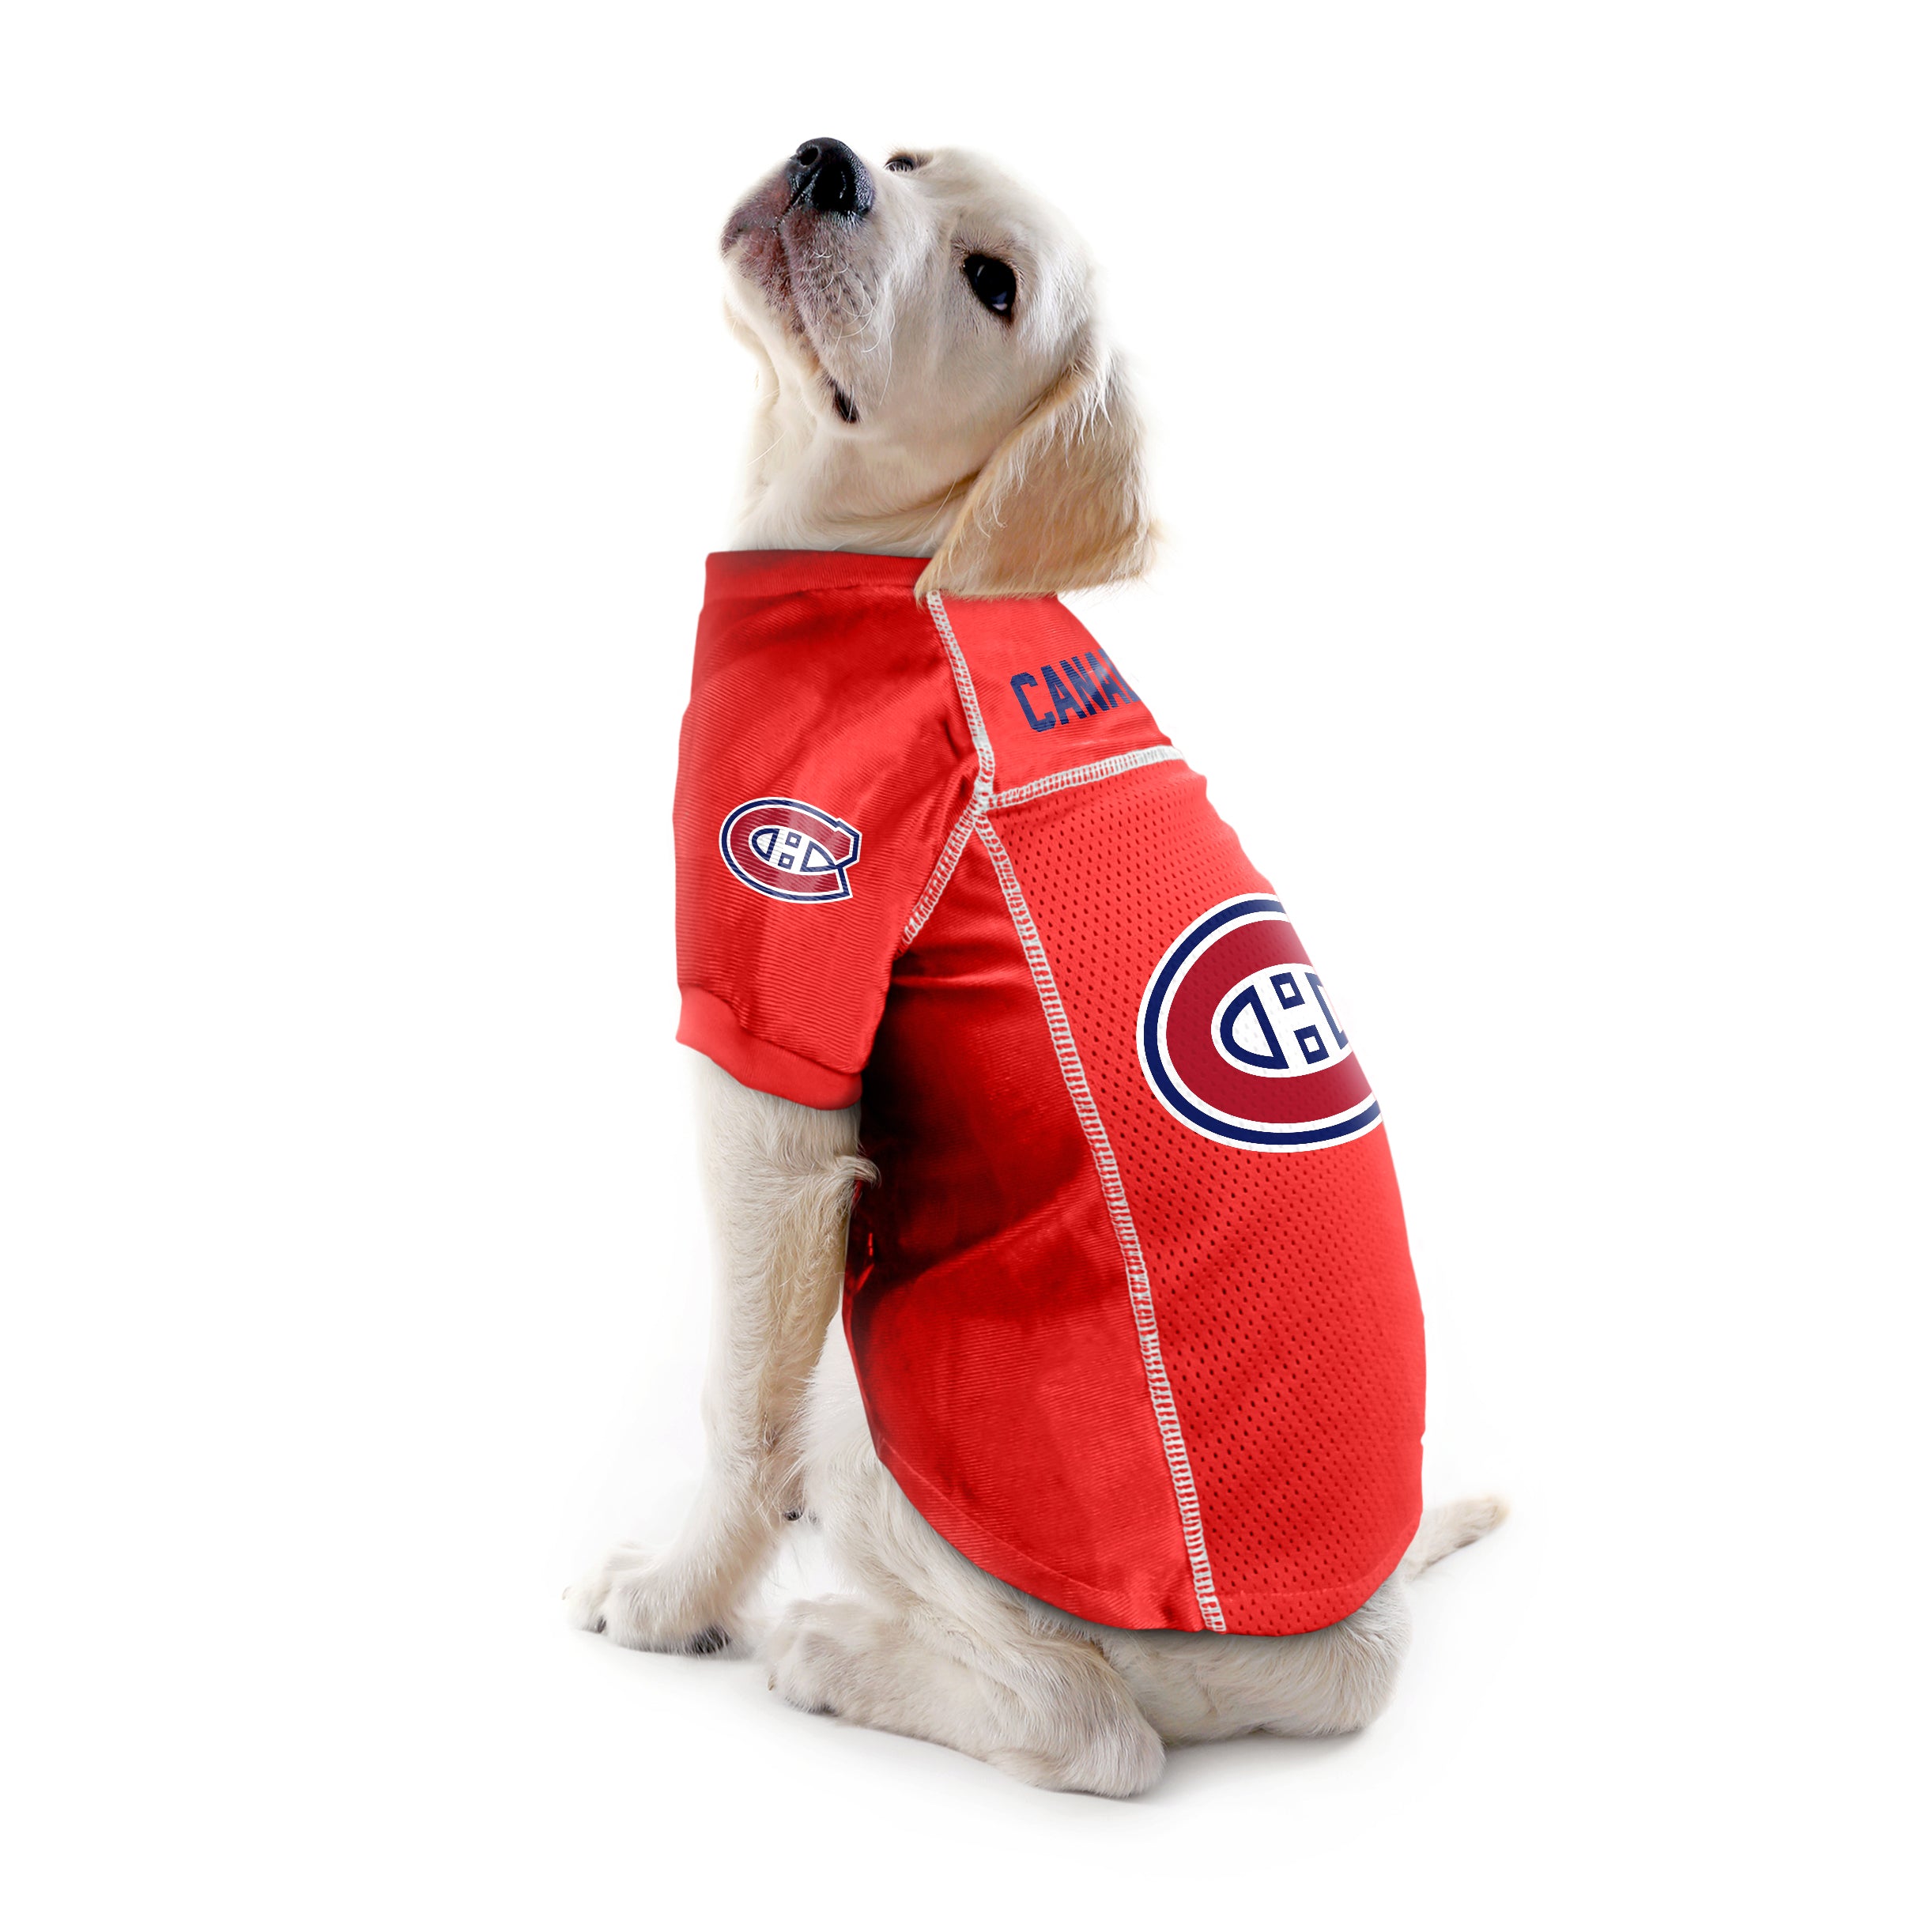  NHL Montreal Canadiens Pet Jersey, Medium : Sports Fan Jerseys  : Sports & Outdoors